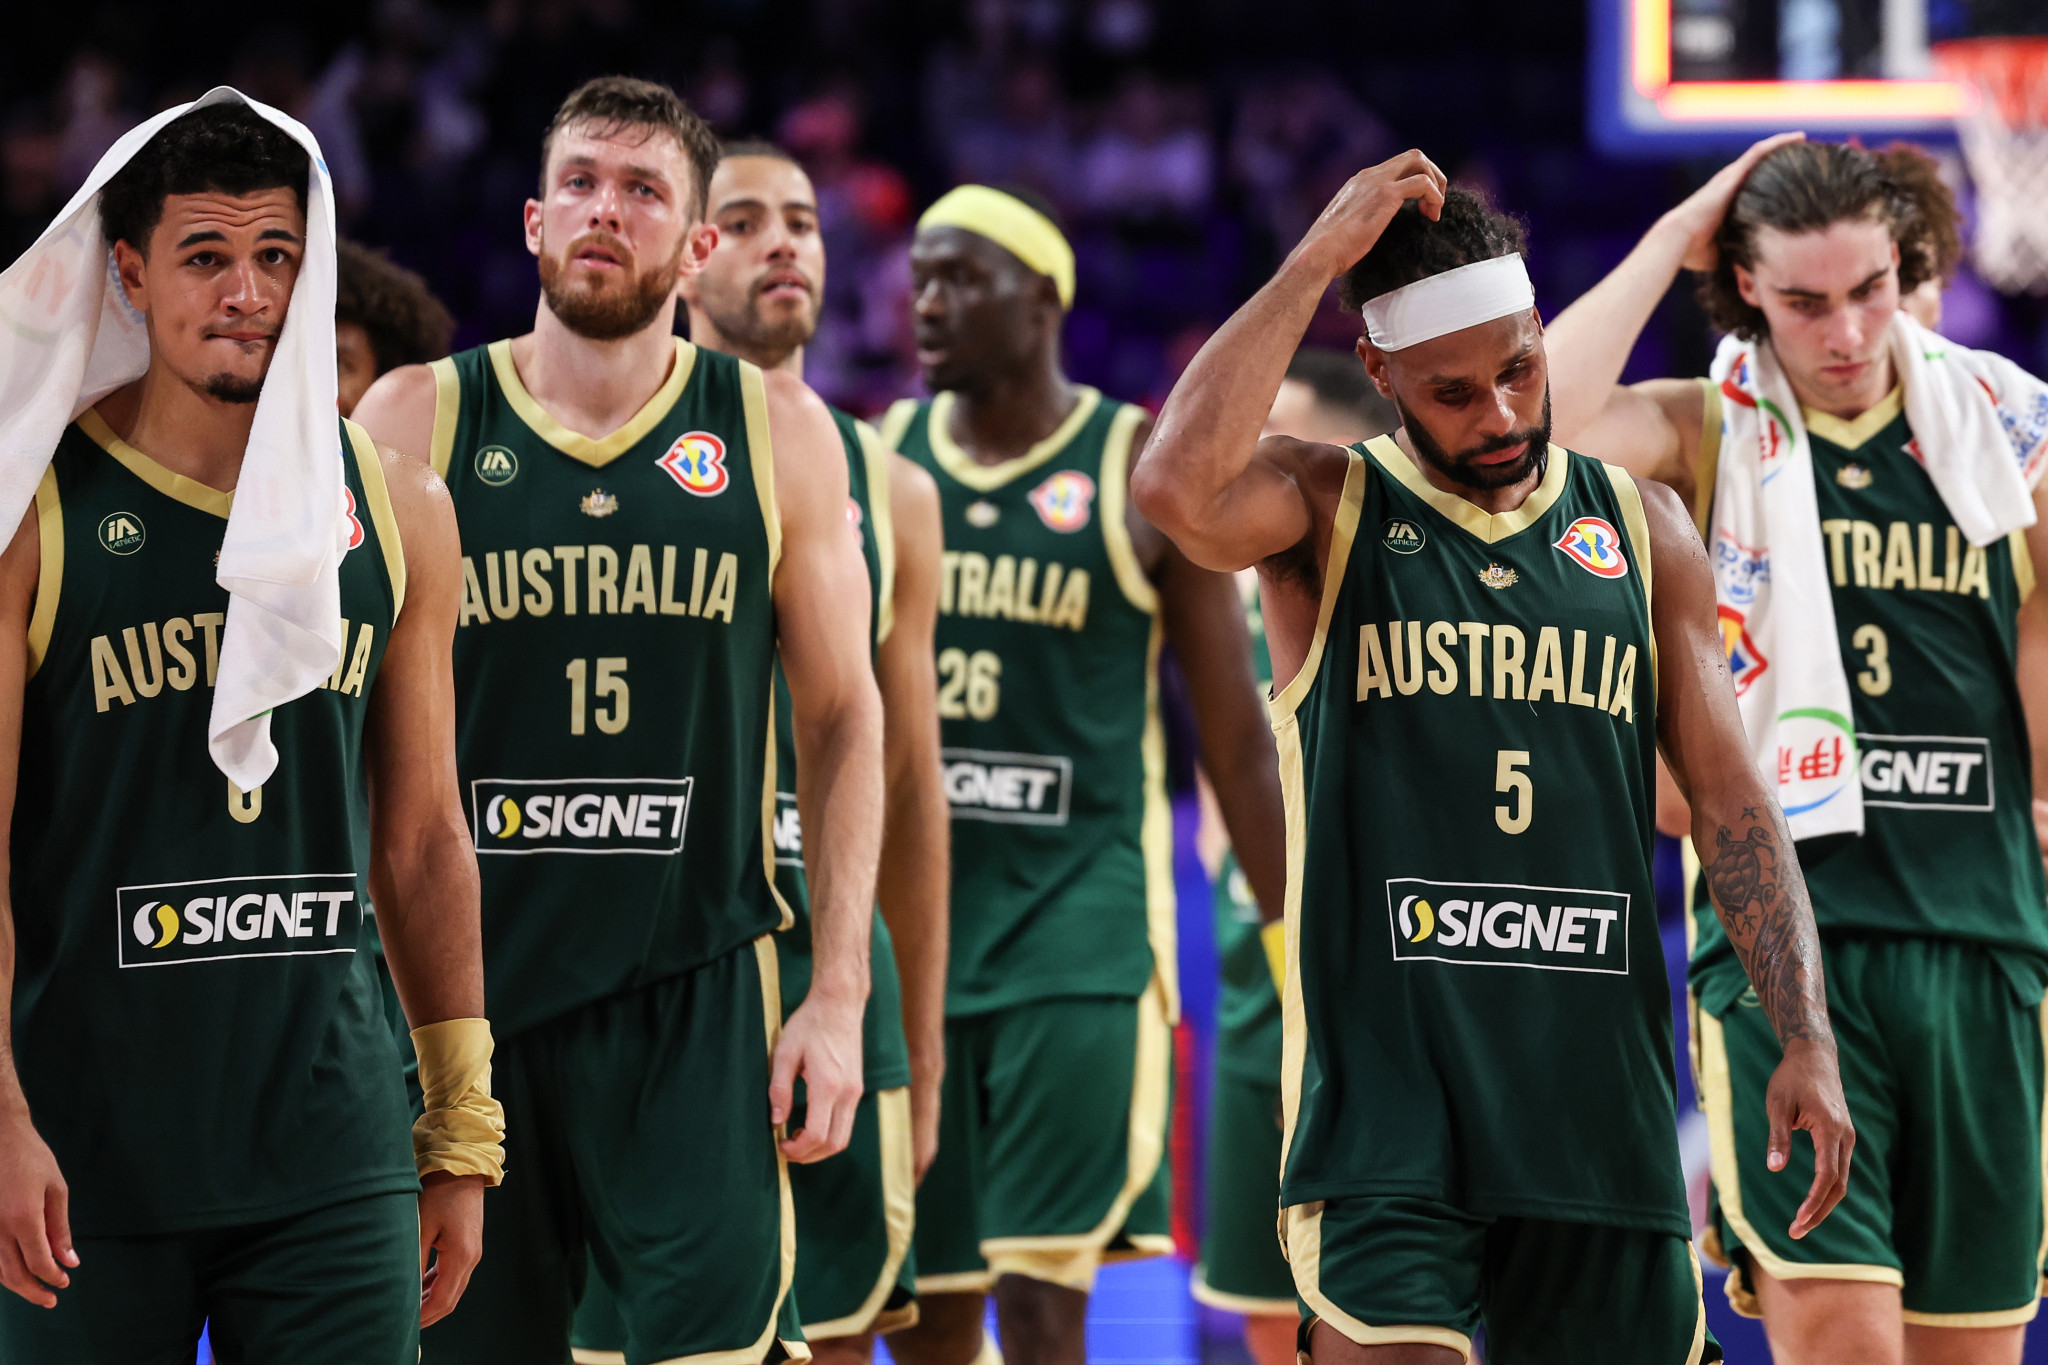 Australia targeting men's basketball podium at Paris 2024 despite "full review" into disappointing FIBA World Cup